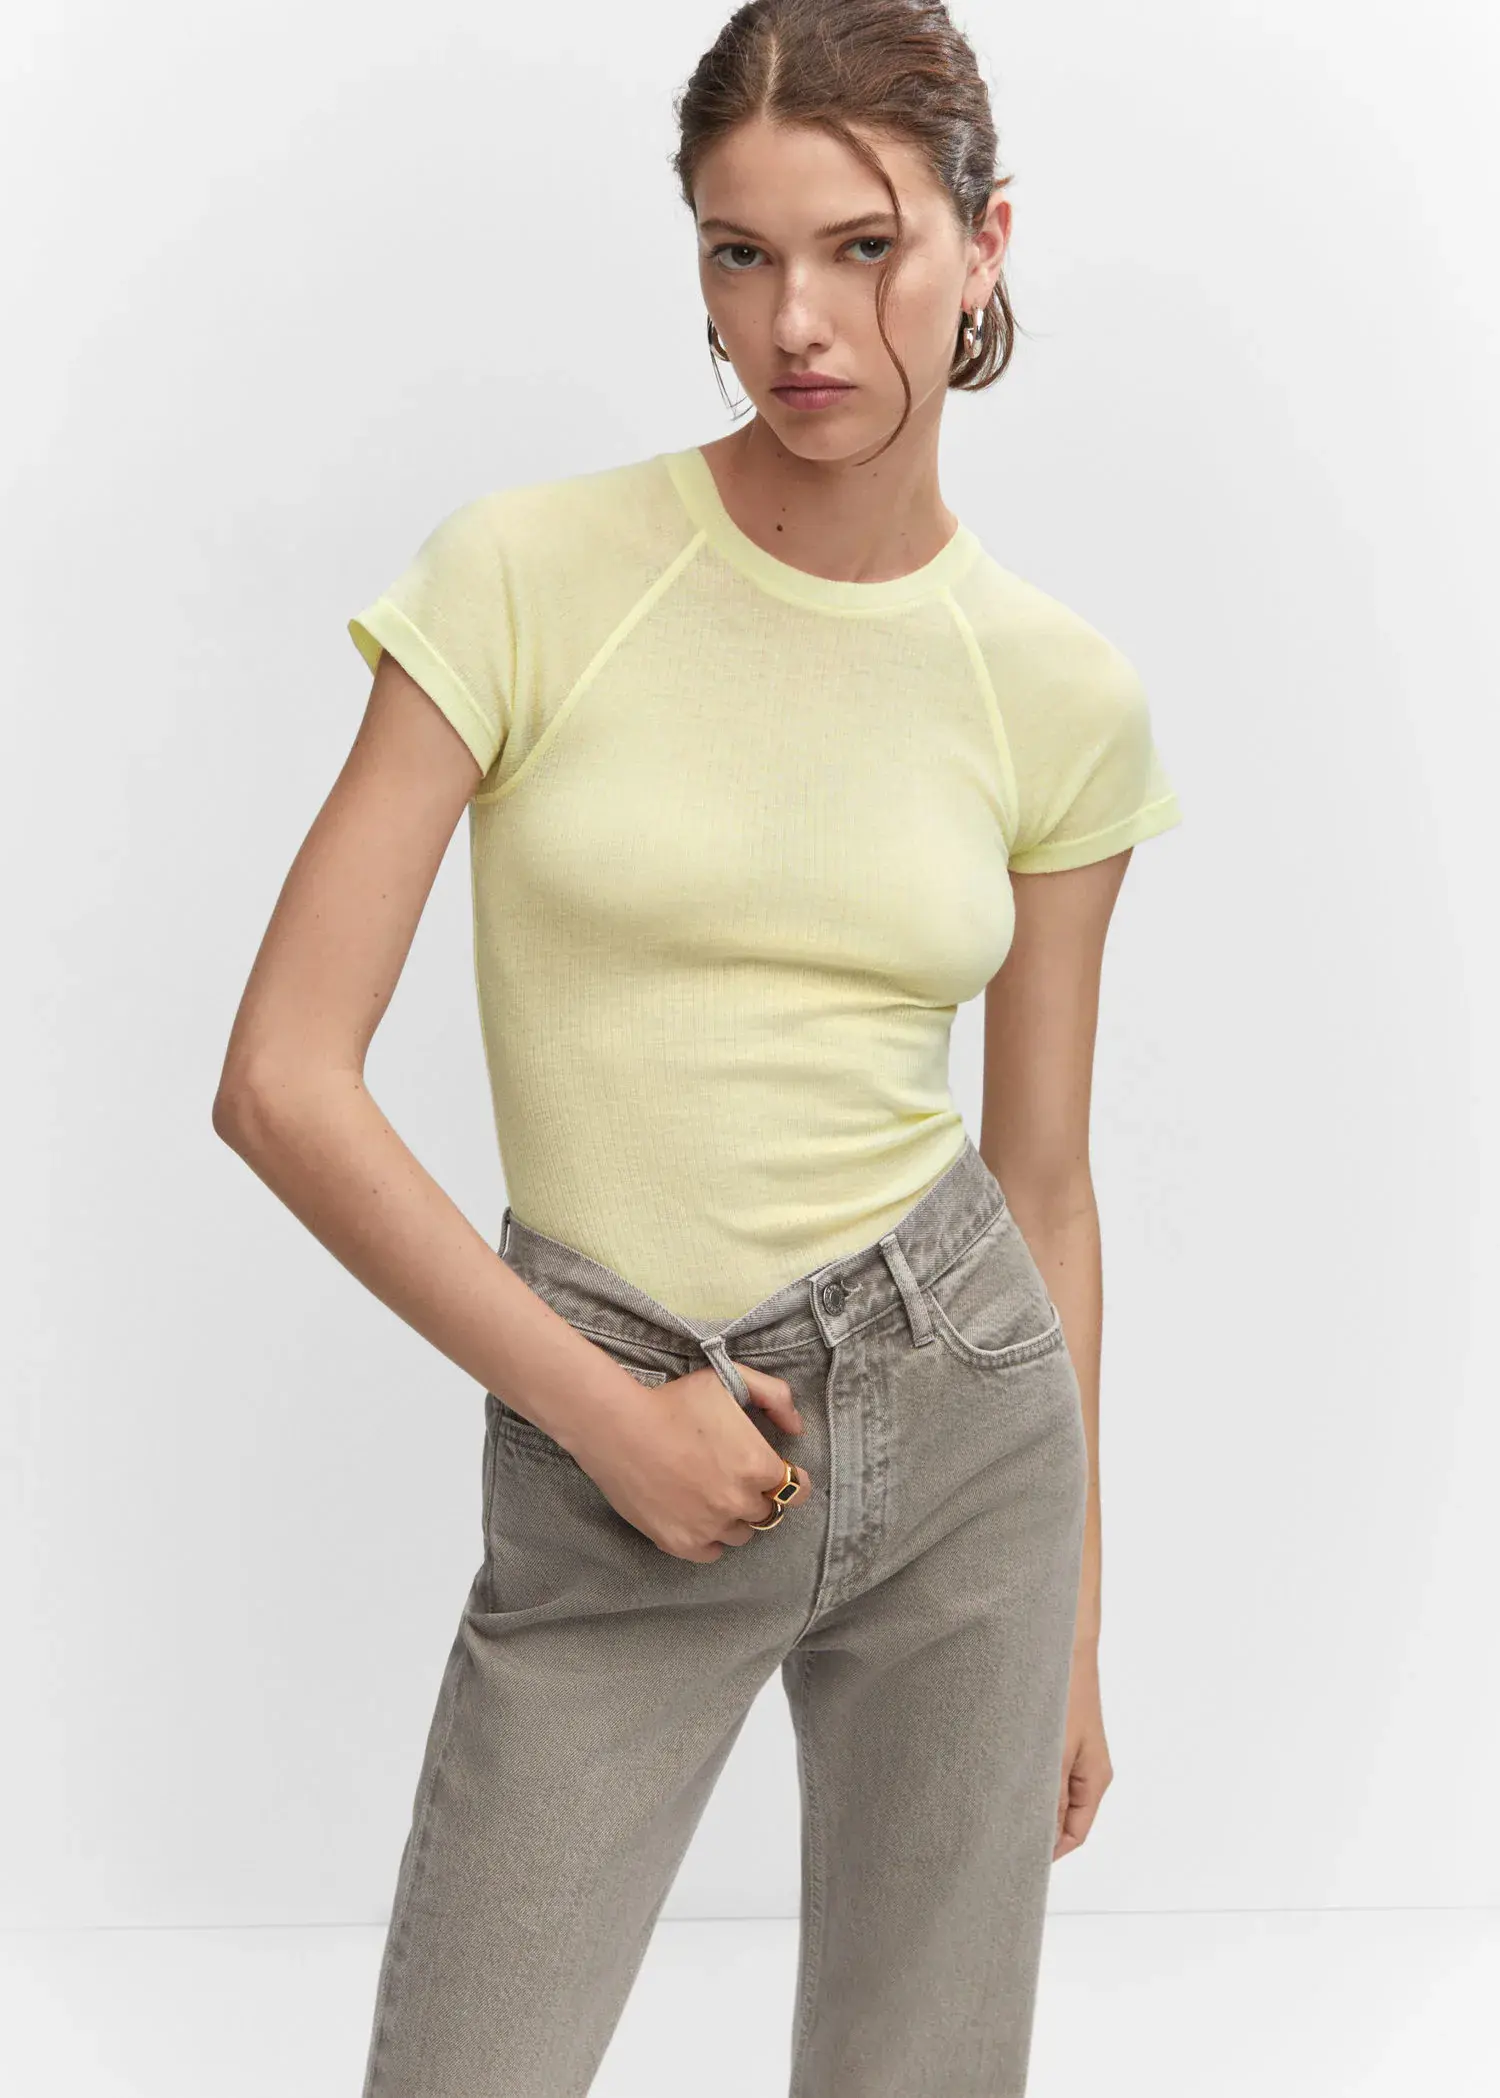 Mango Seam detail T-shirt. a woman in a yellow shirt and gray pants. 